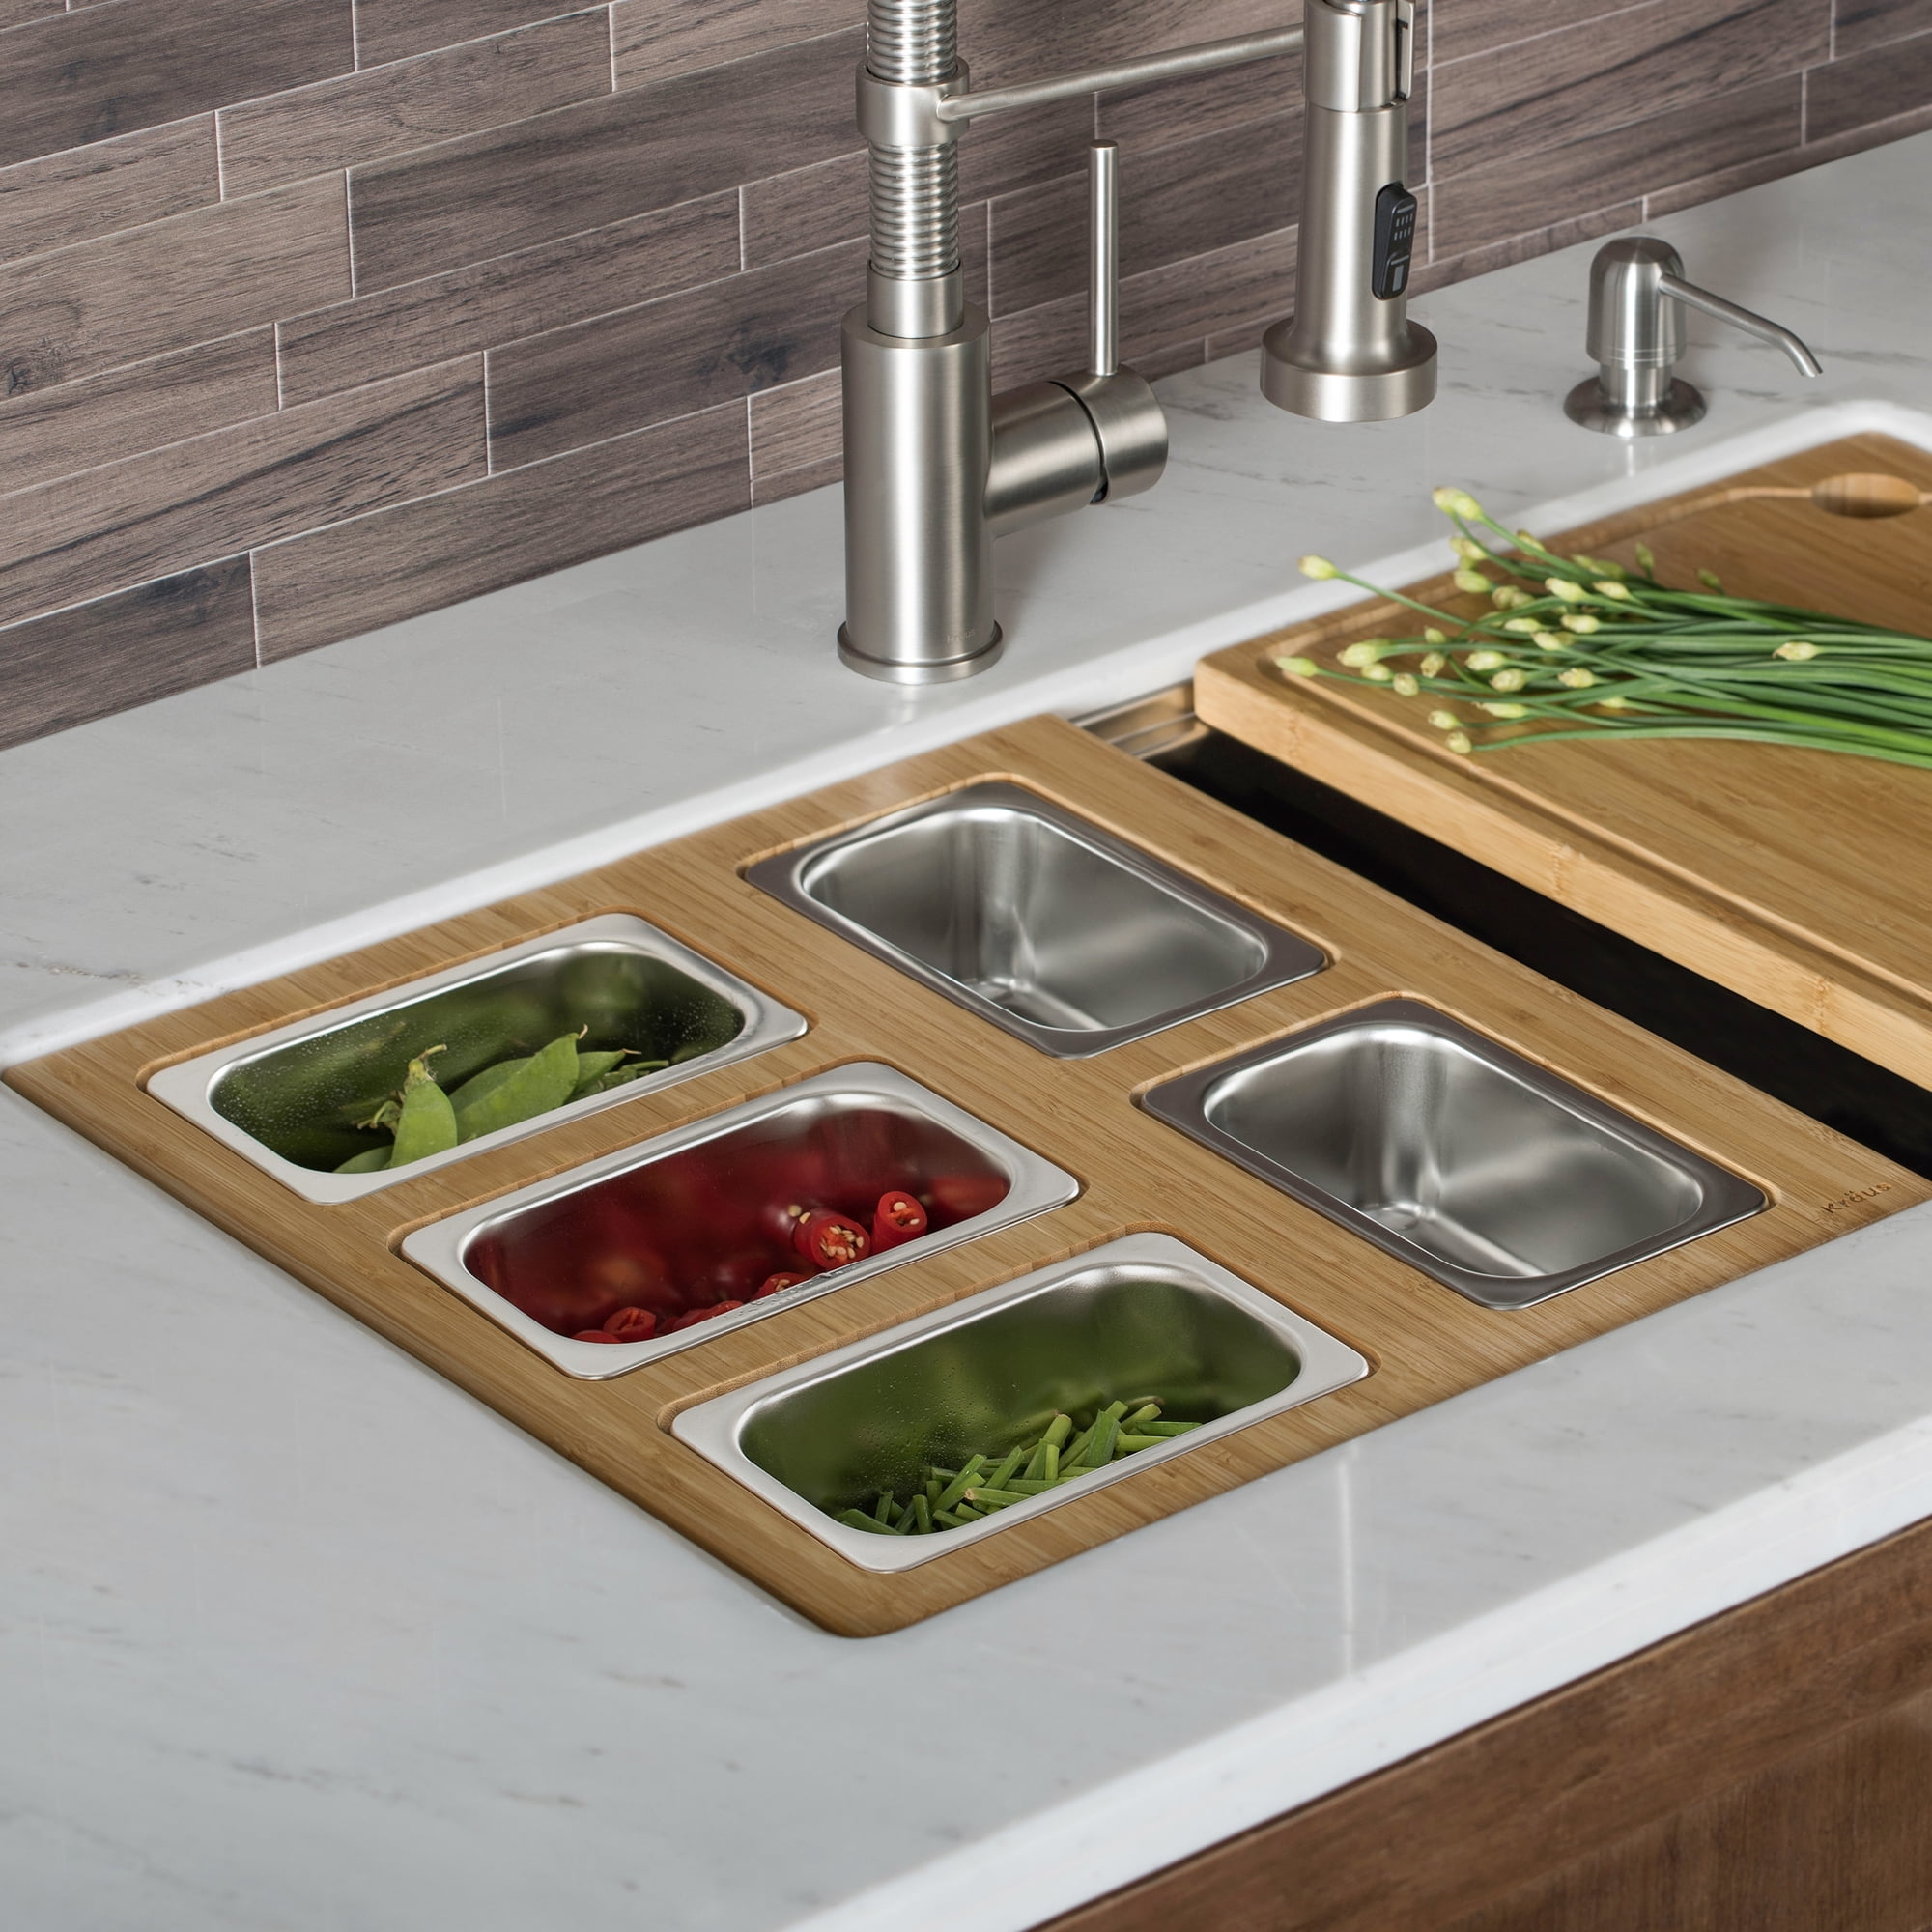 Kraus KRAUS Workstation Kitchen Sink Solid Bamboo Cutting Board/Serving Board Size: 17 W x 23 L